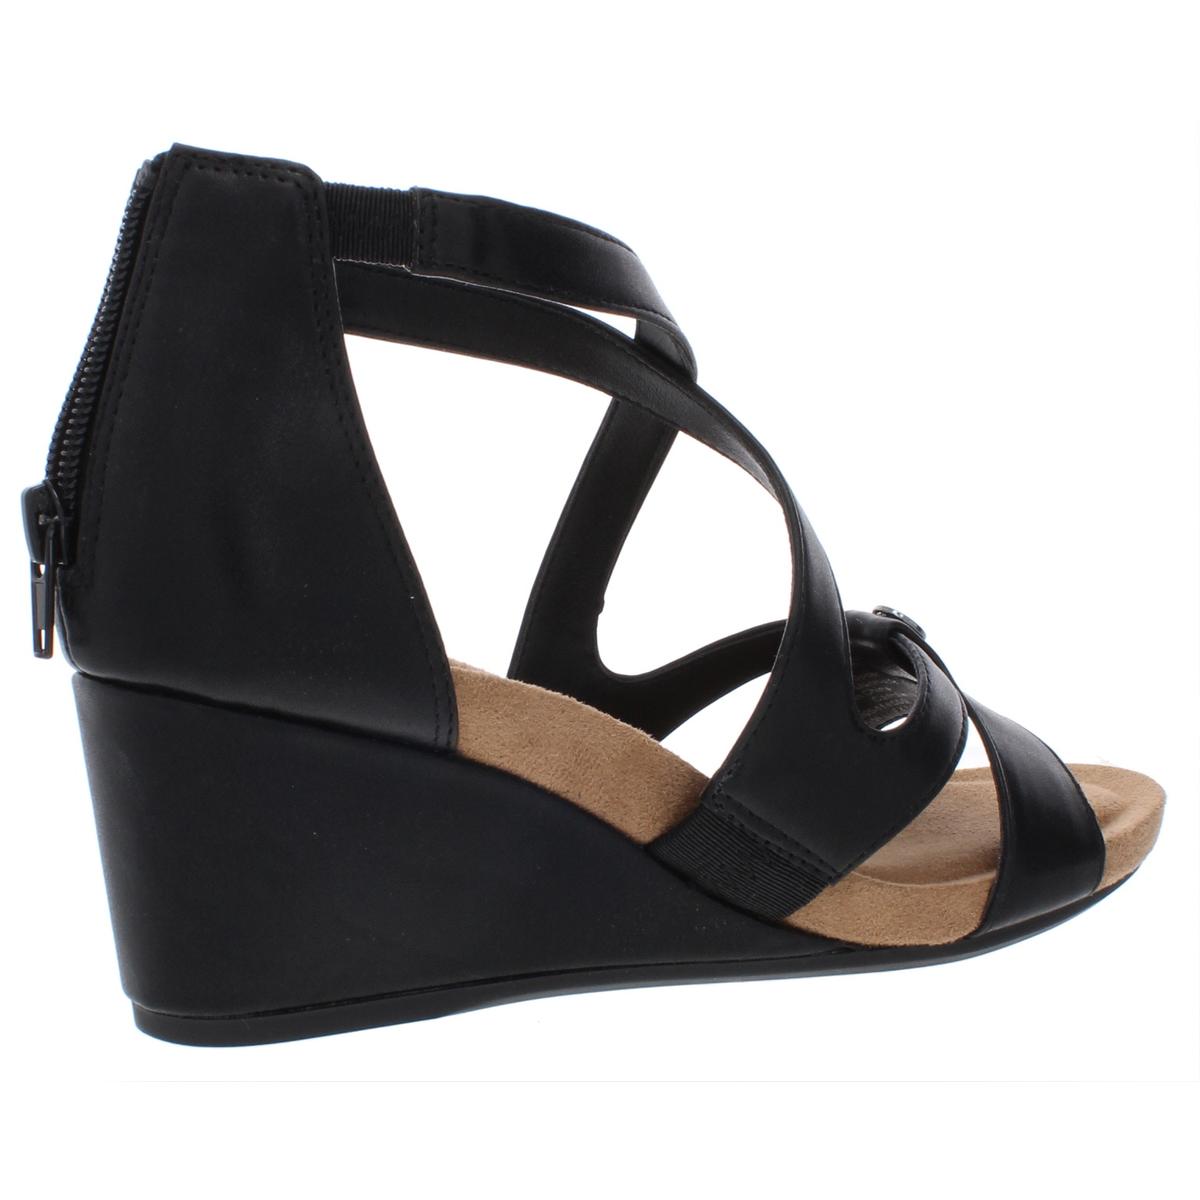 Giani Bernini Womens Camdenn Faux Leather Open Toe Wedge Sandals Shoes ...